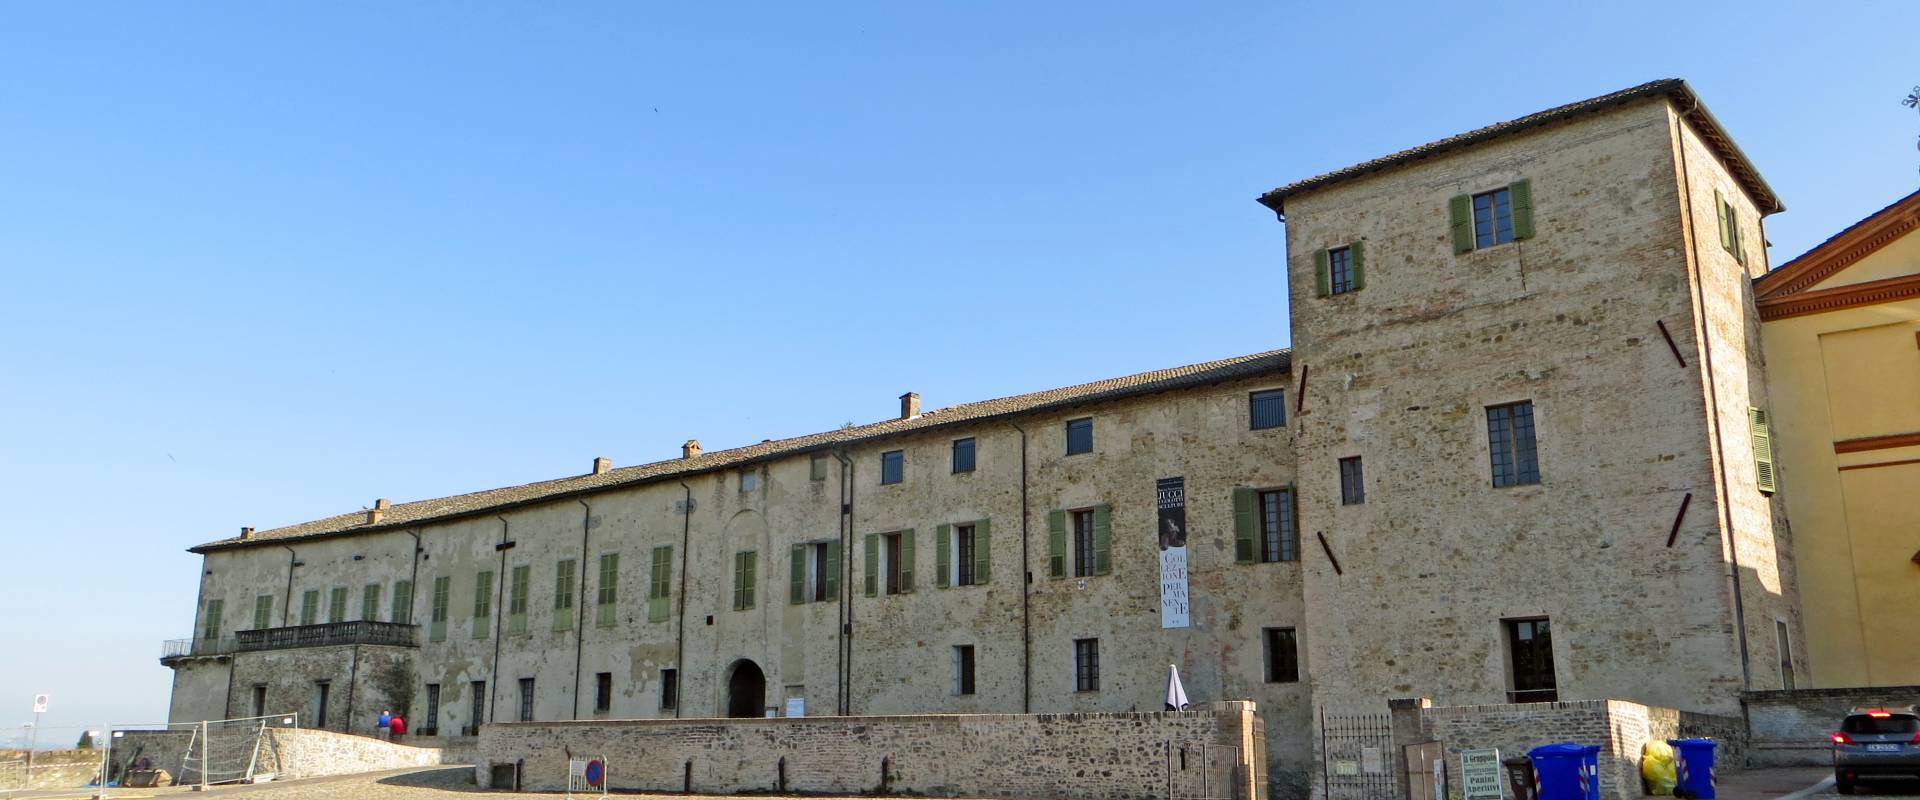 Rocca Sanvitale (Sala Baganza) - facciata 3 2019-06-25 photo by Parma198